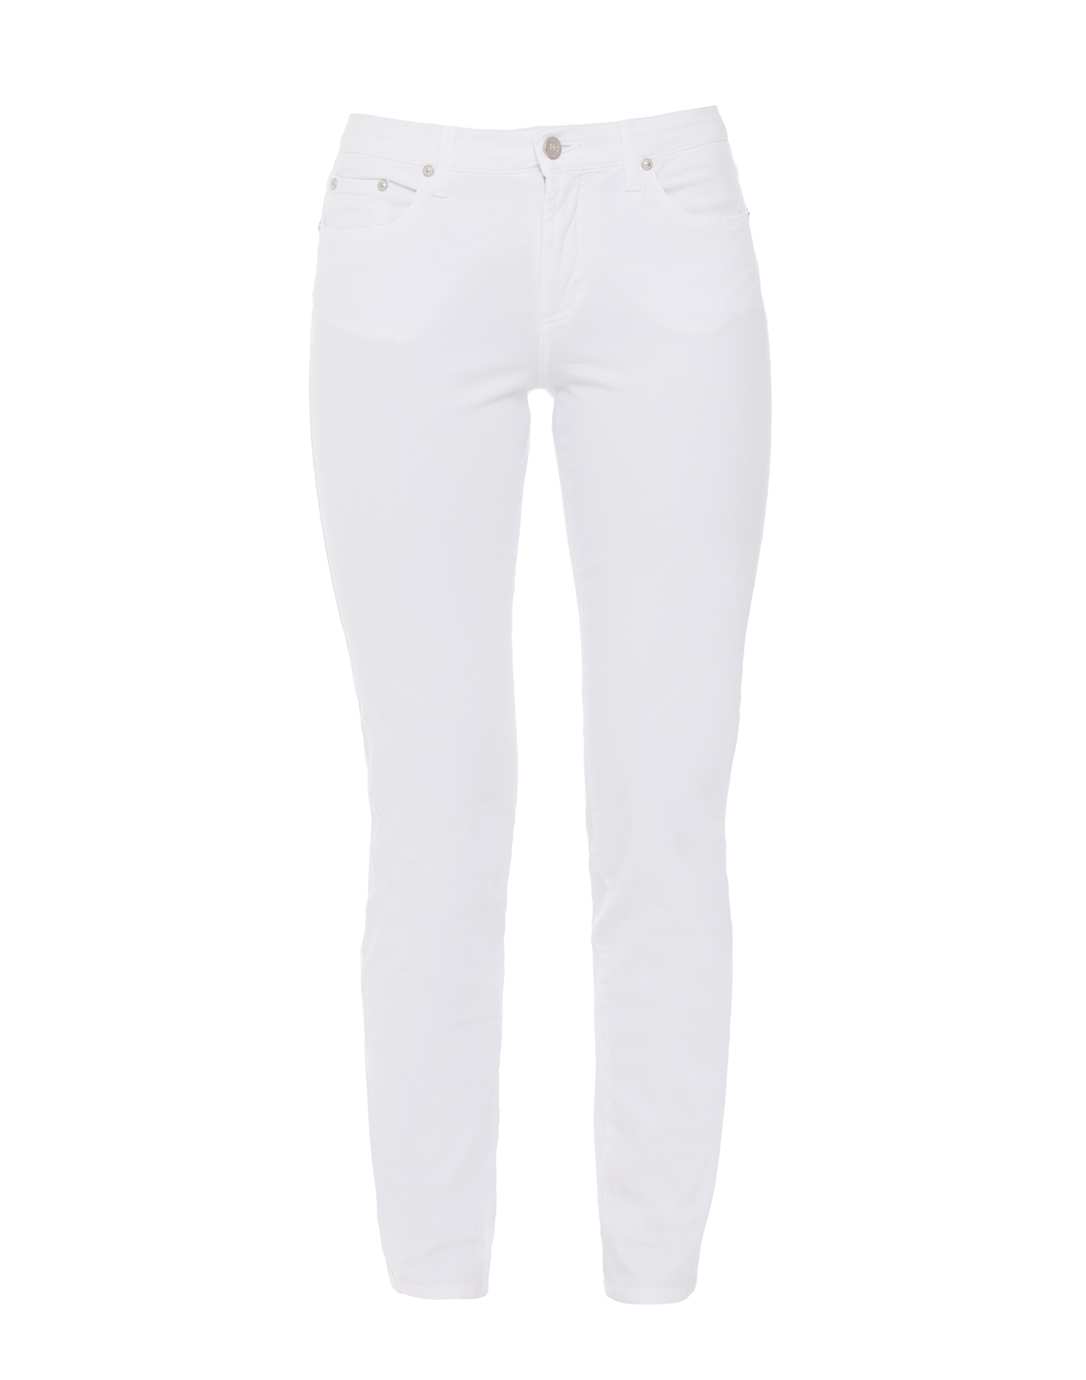 White Stretch Cotton Twill Jeans | Fabrizio Gianni